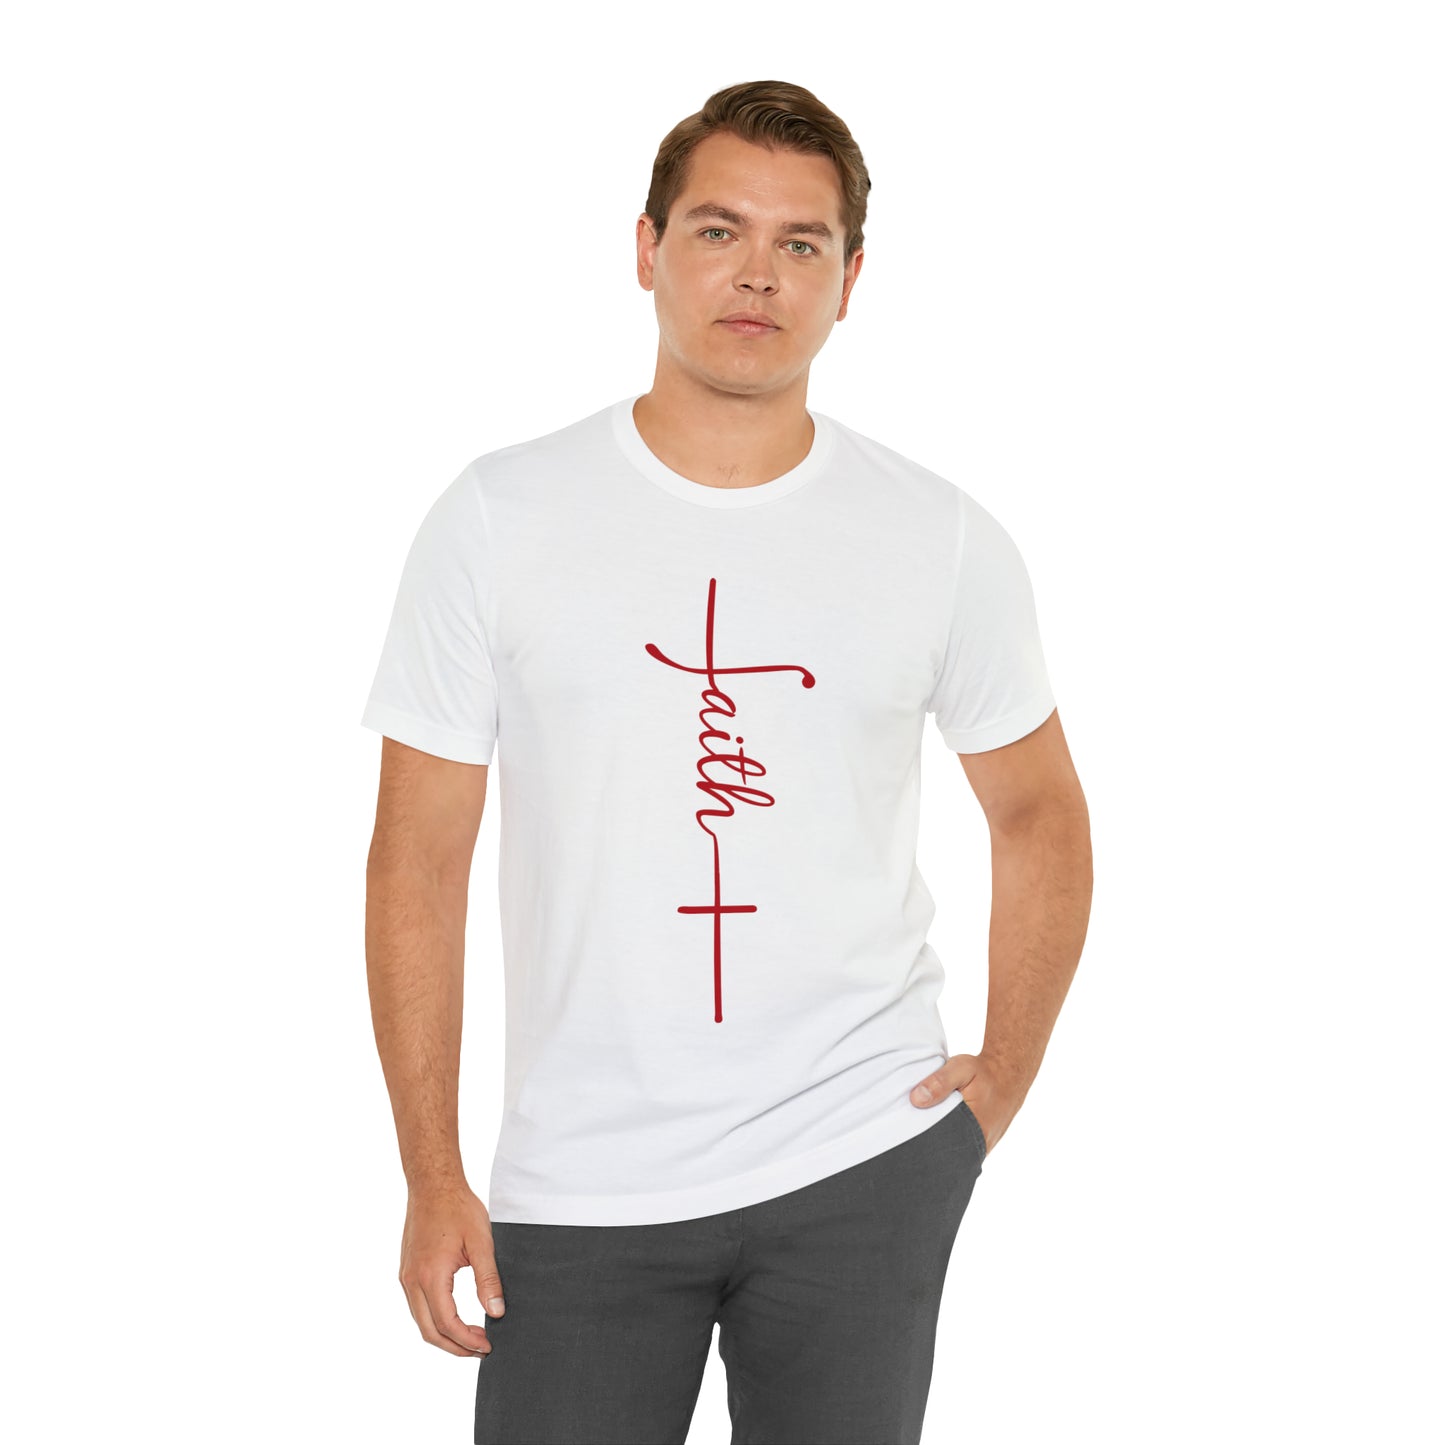 Cursive Faith with Cross Tee - Red Font